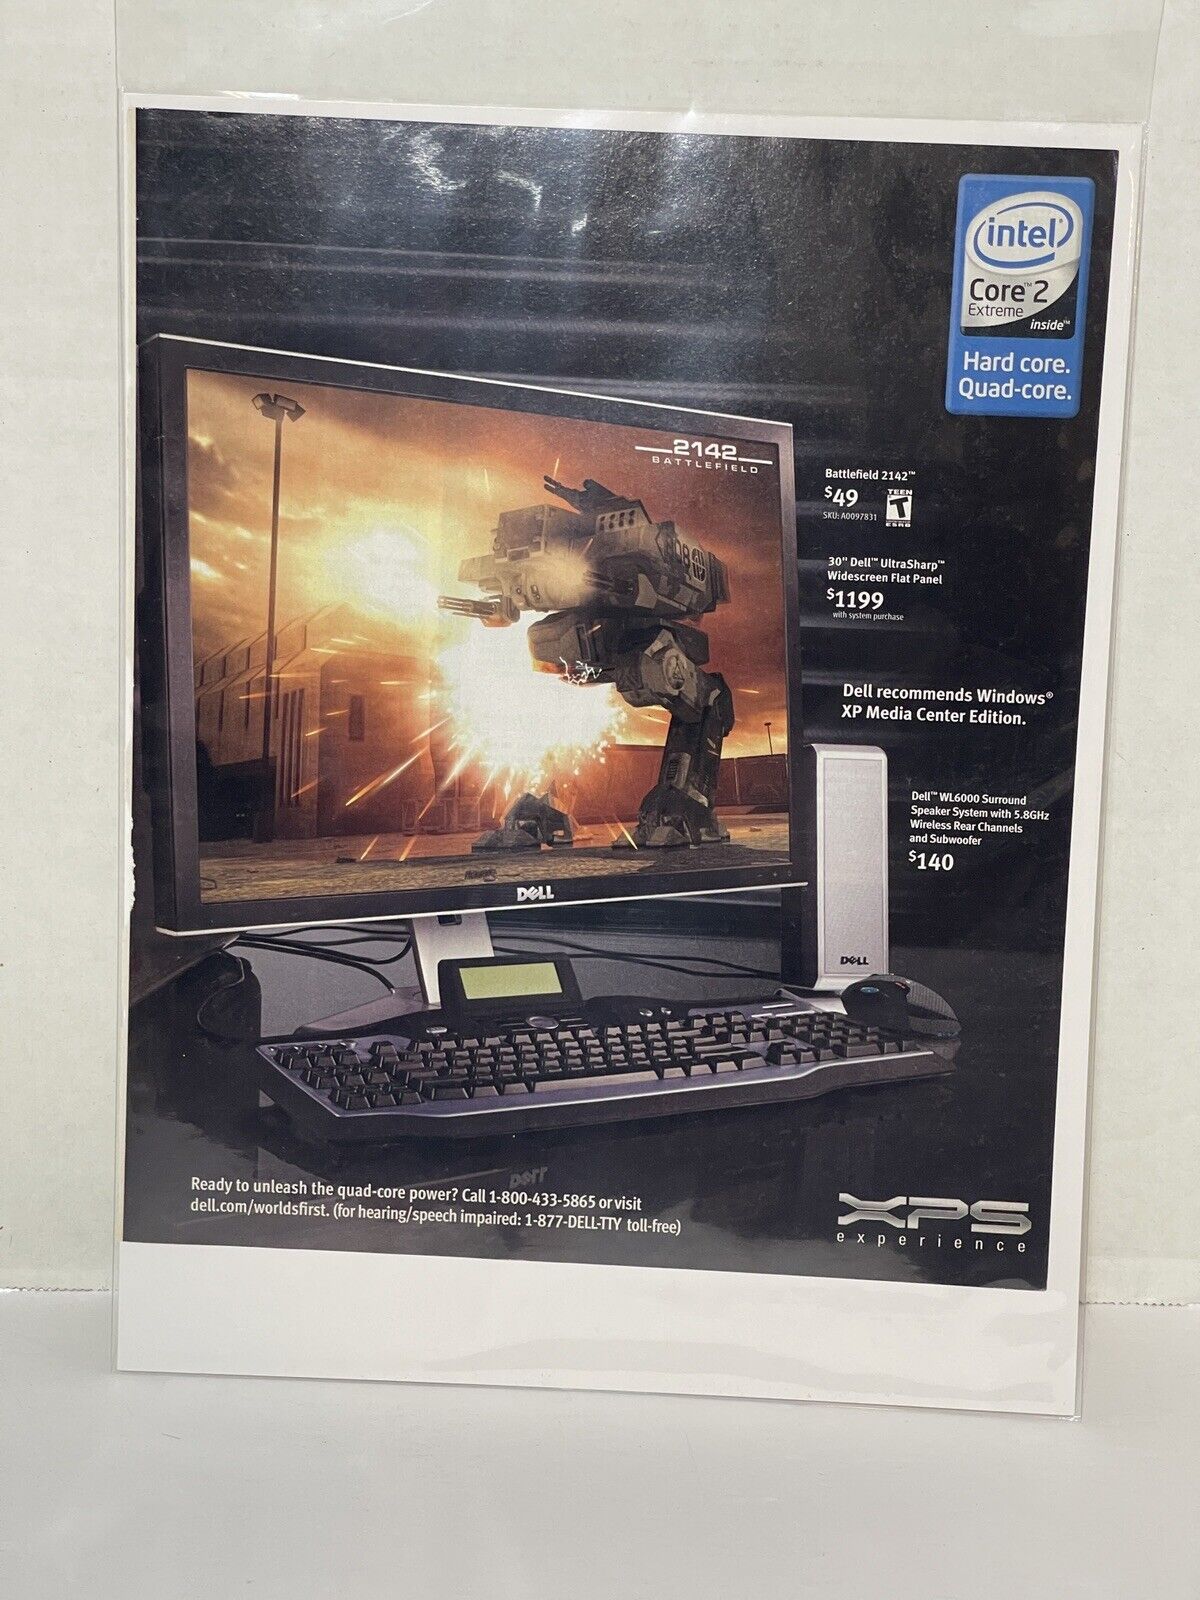 2007 Intel Core 2 Extreme Quad-Core Processor Print Ad/Poster PC Gamer Wall Art